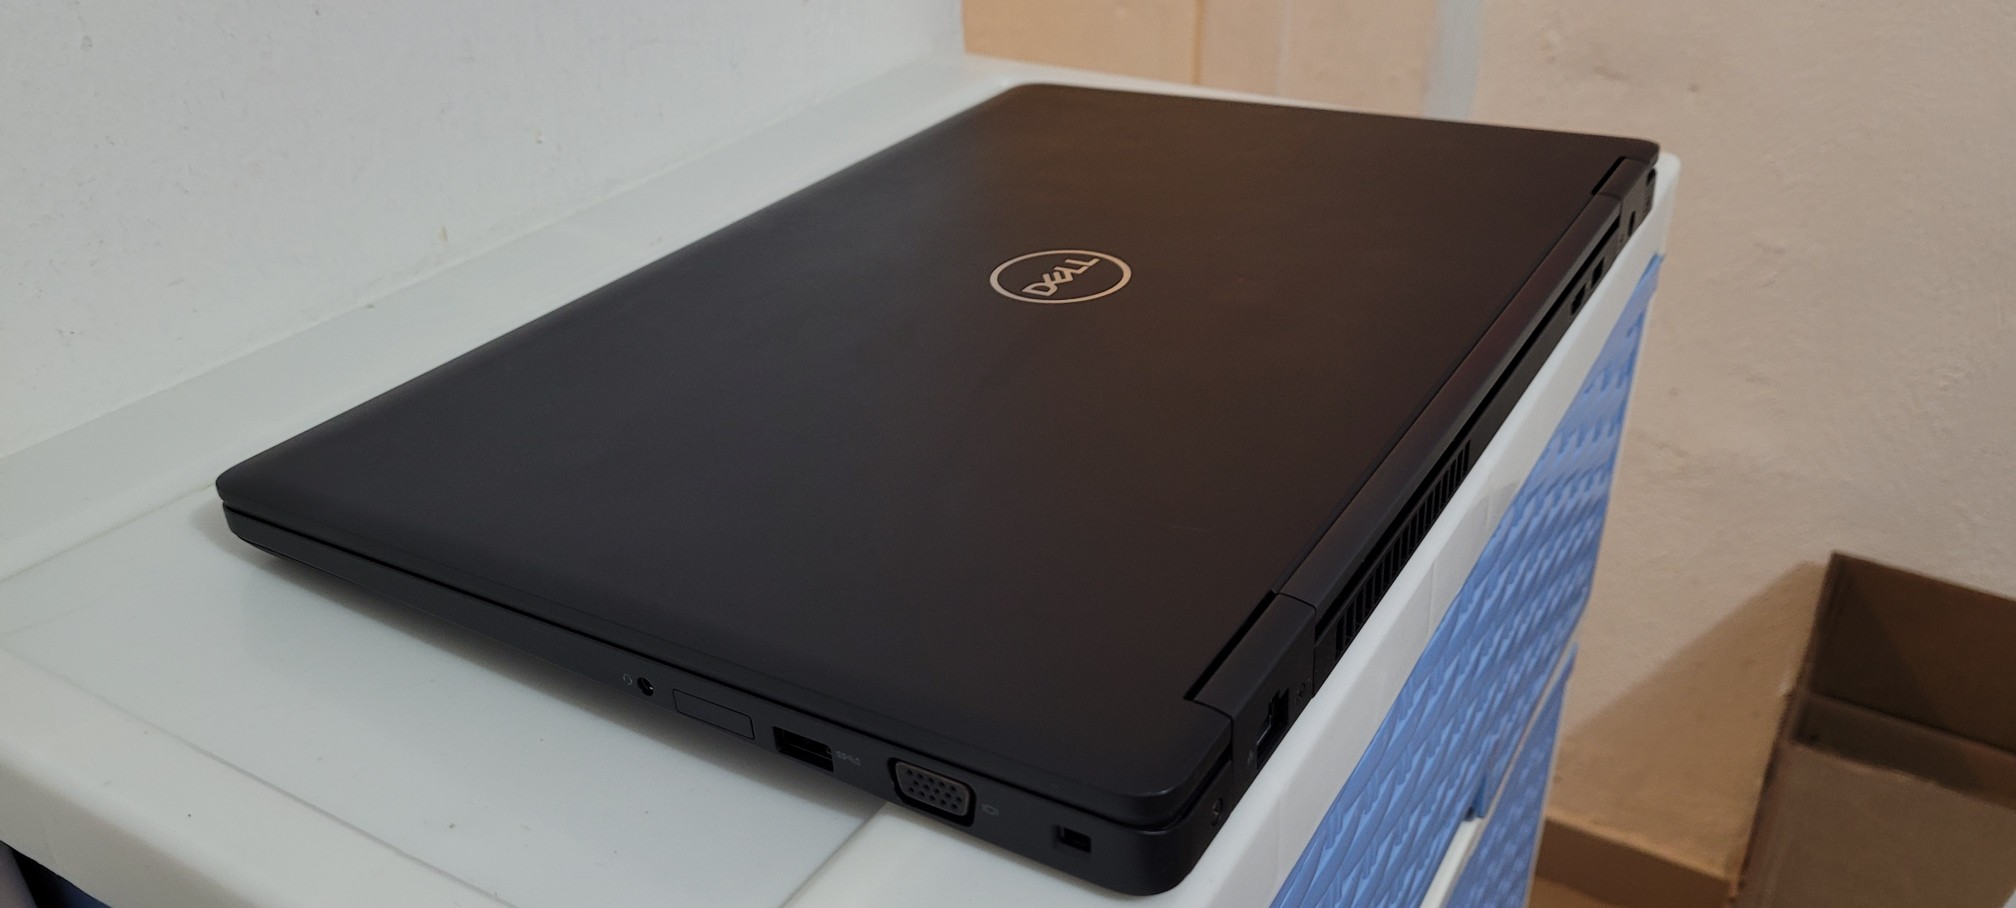 computadoras y laptops - Dell 5590 17 Pulg Core i5 8va Gen Ram 16gb ddr4 Disco 512gb SSD Video 8gb 2